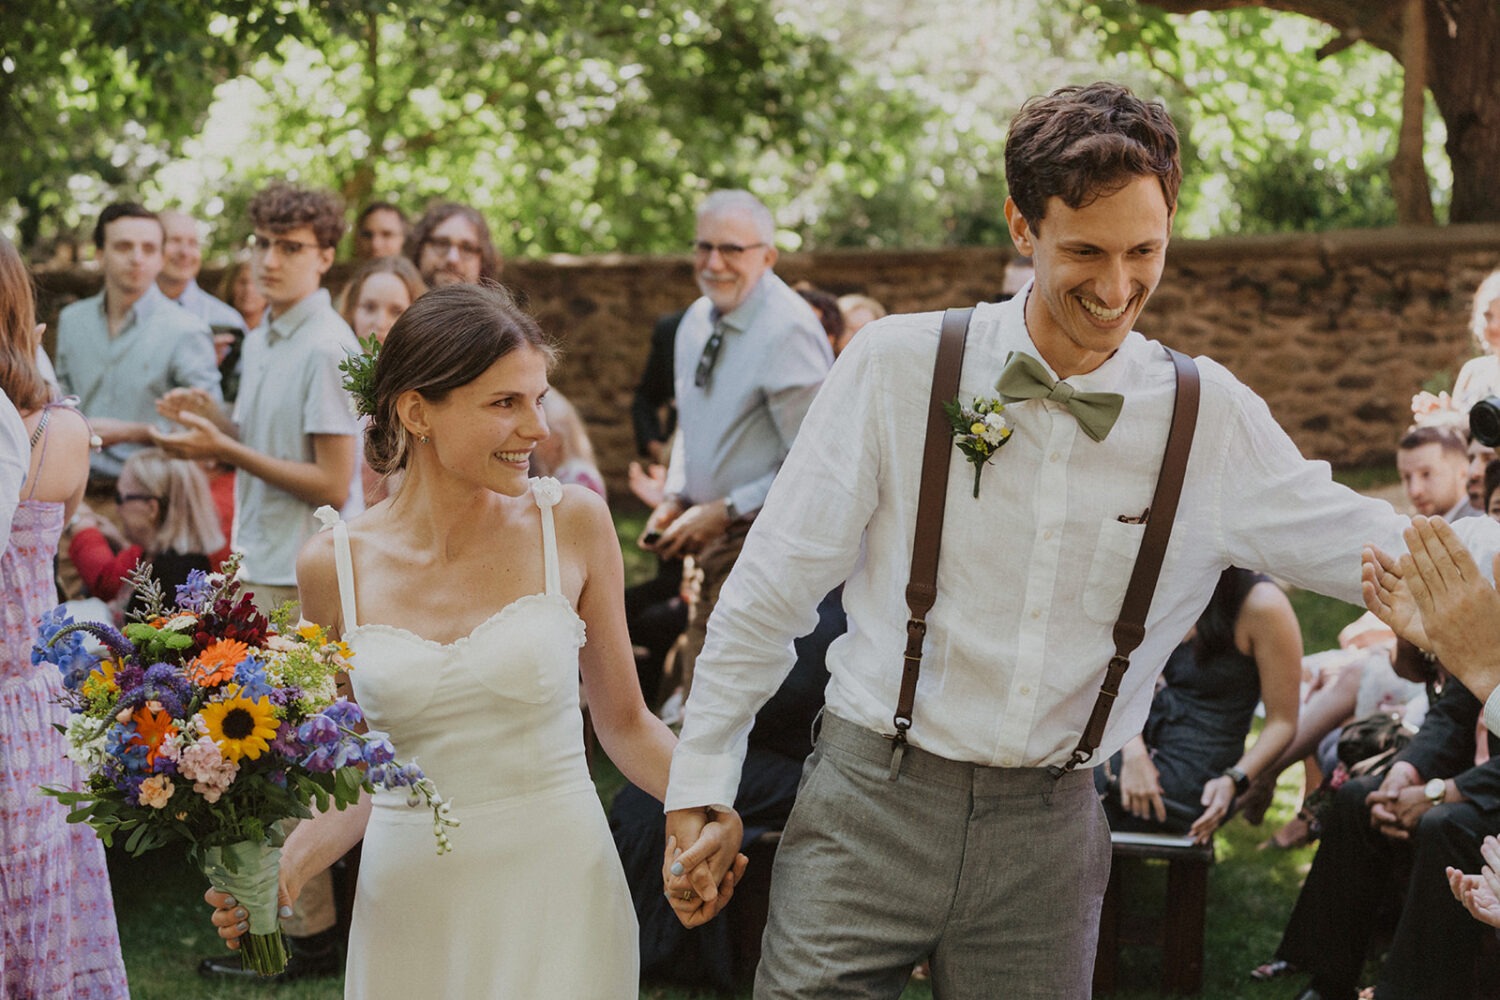 couple walks holding hands at rustic outdoor wedding 